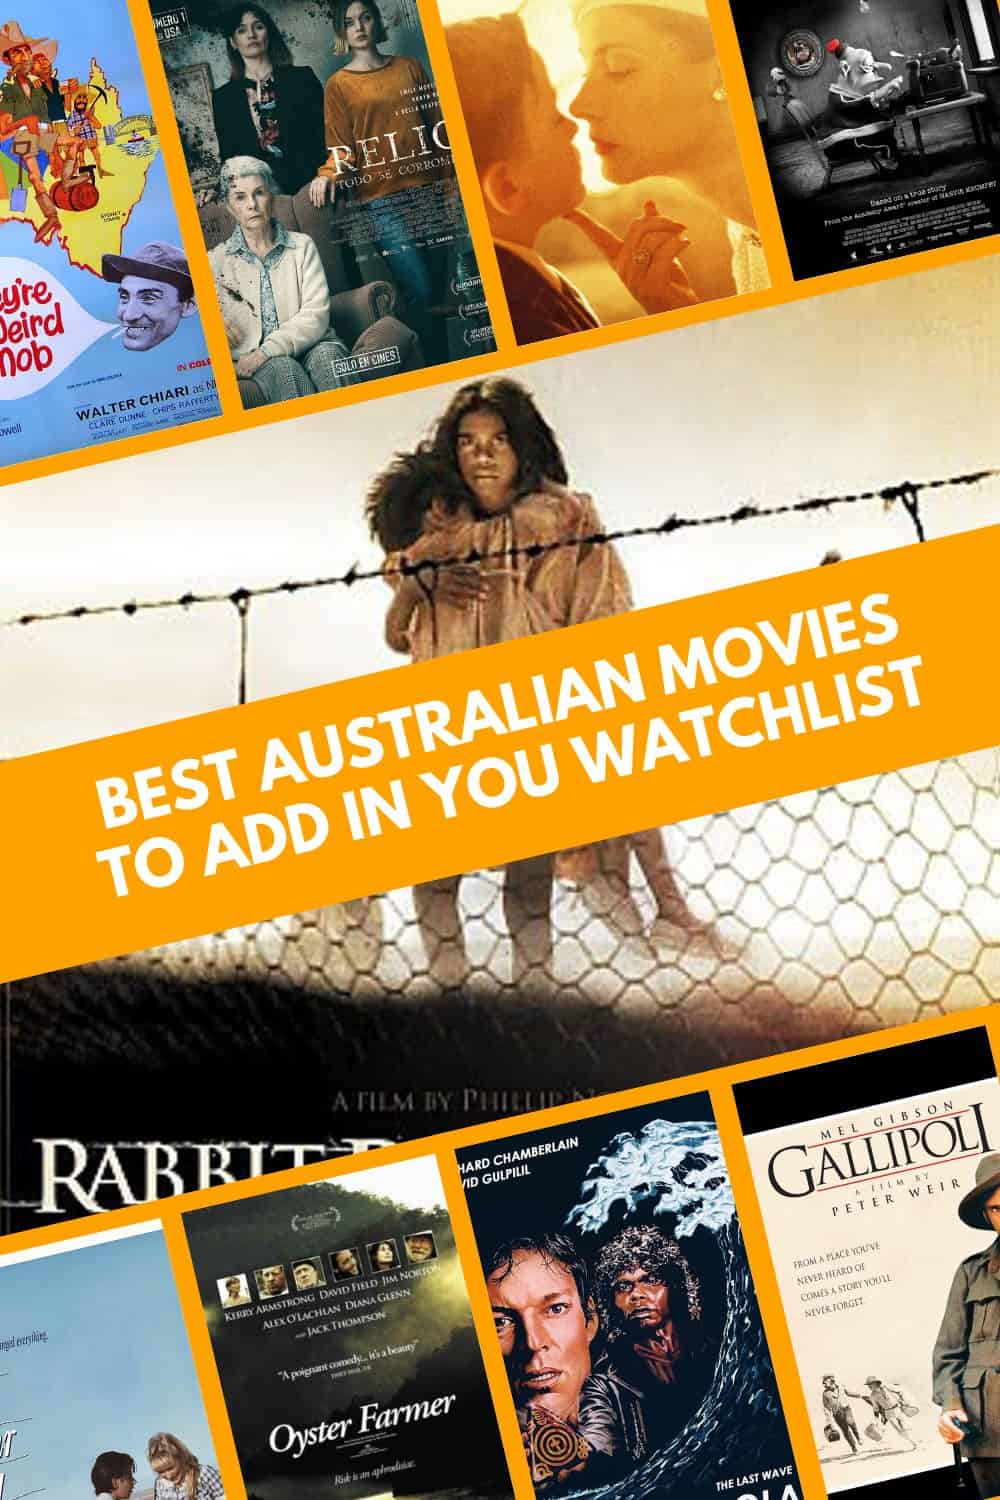 Best Australian Movies to Add in You Watchlist